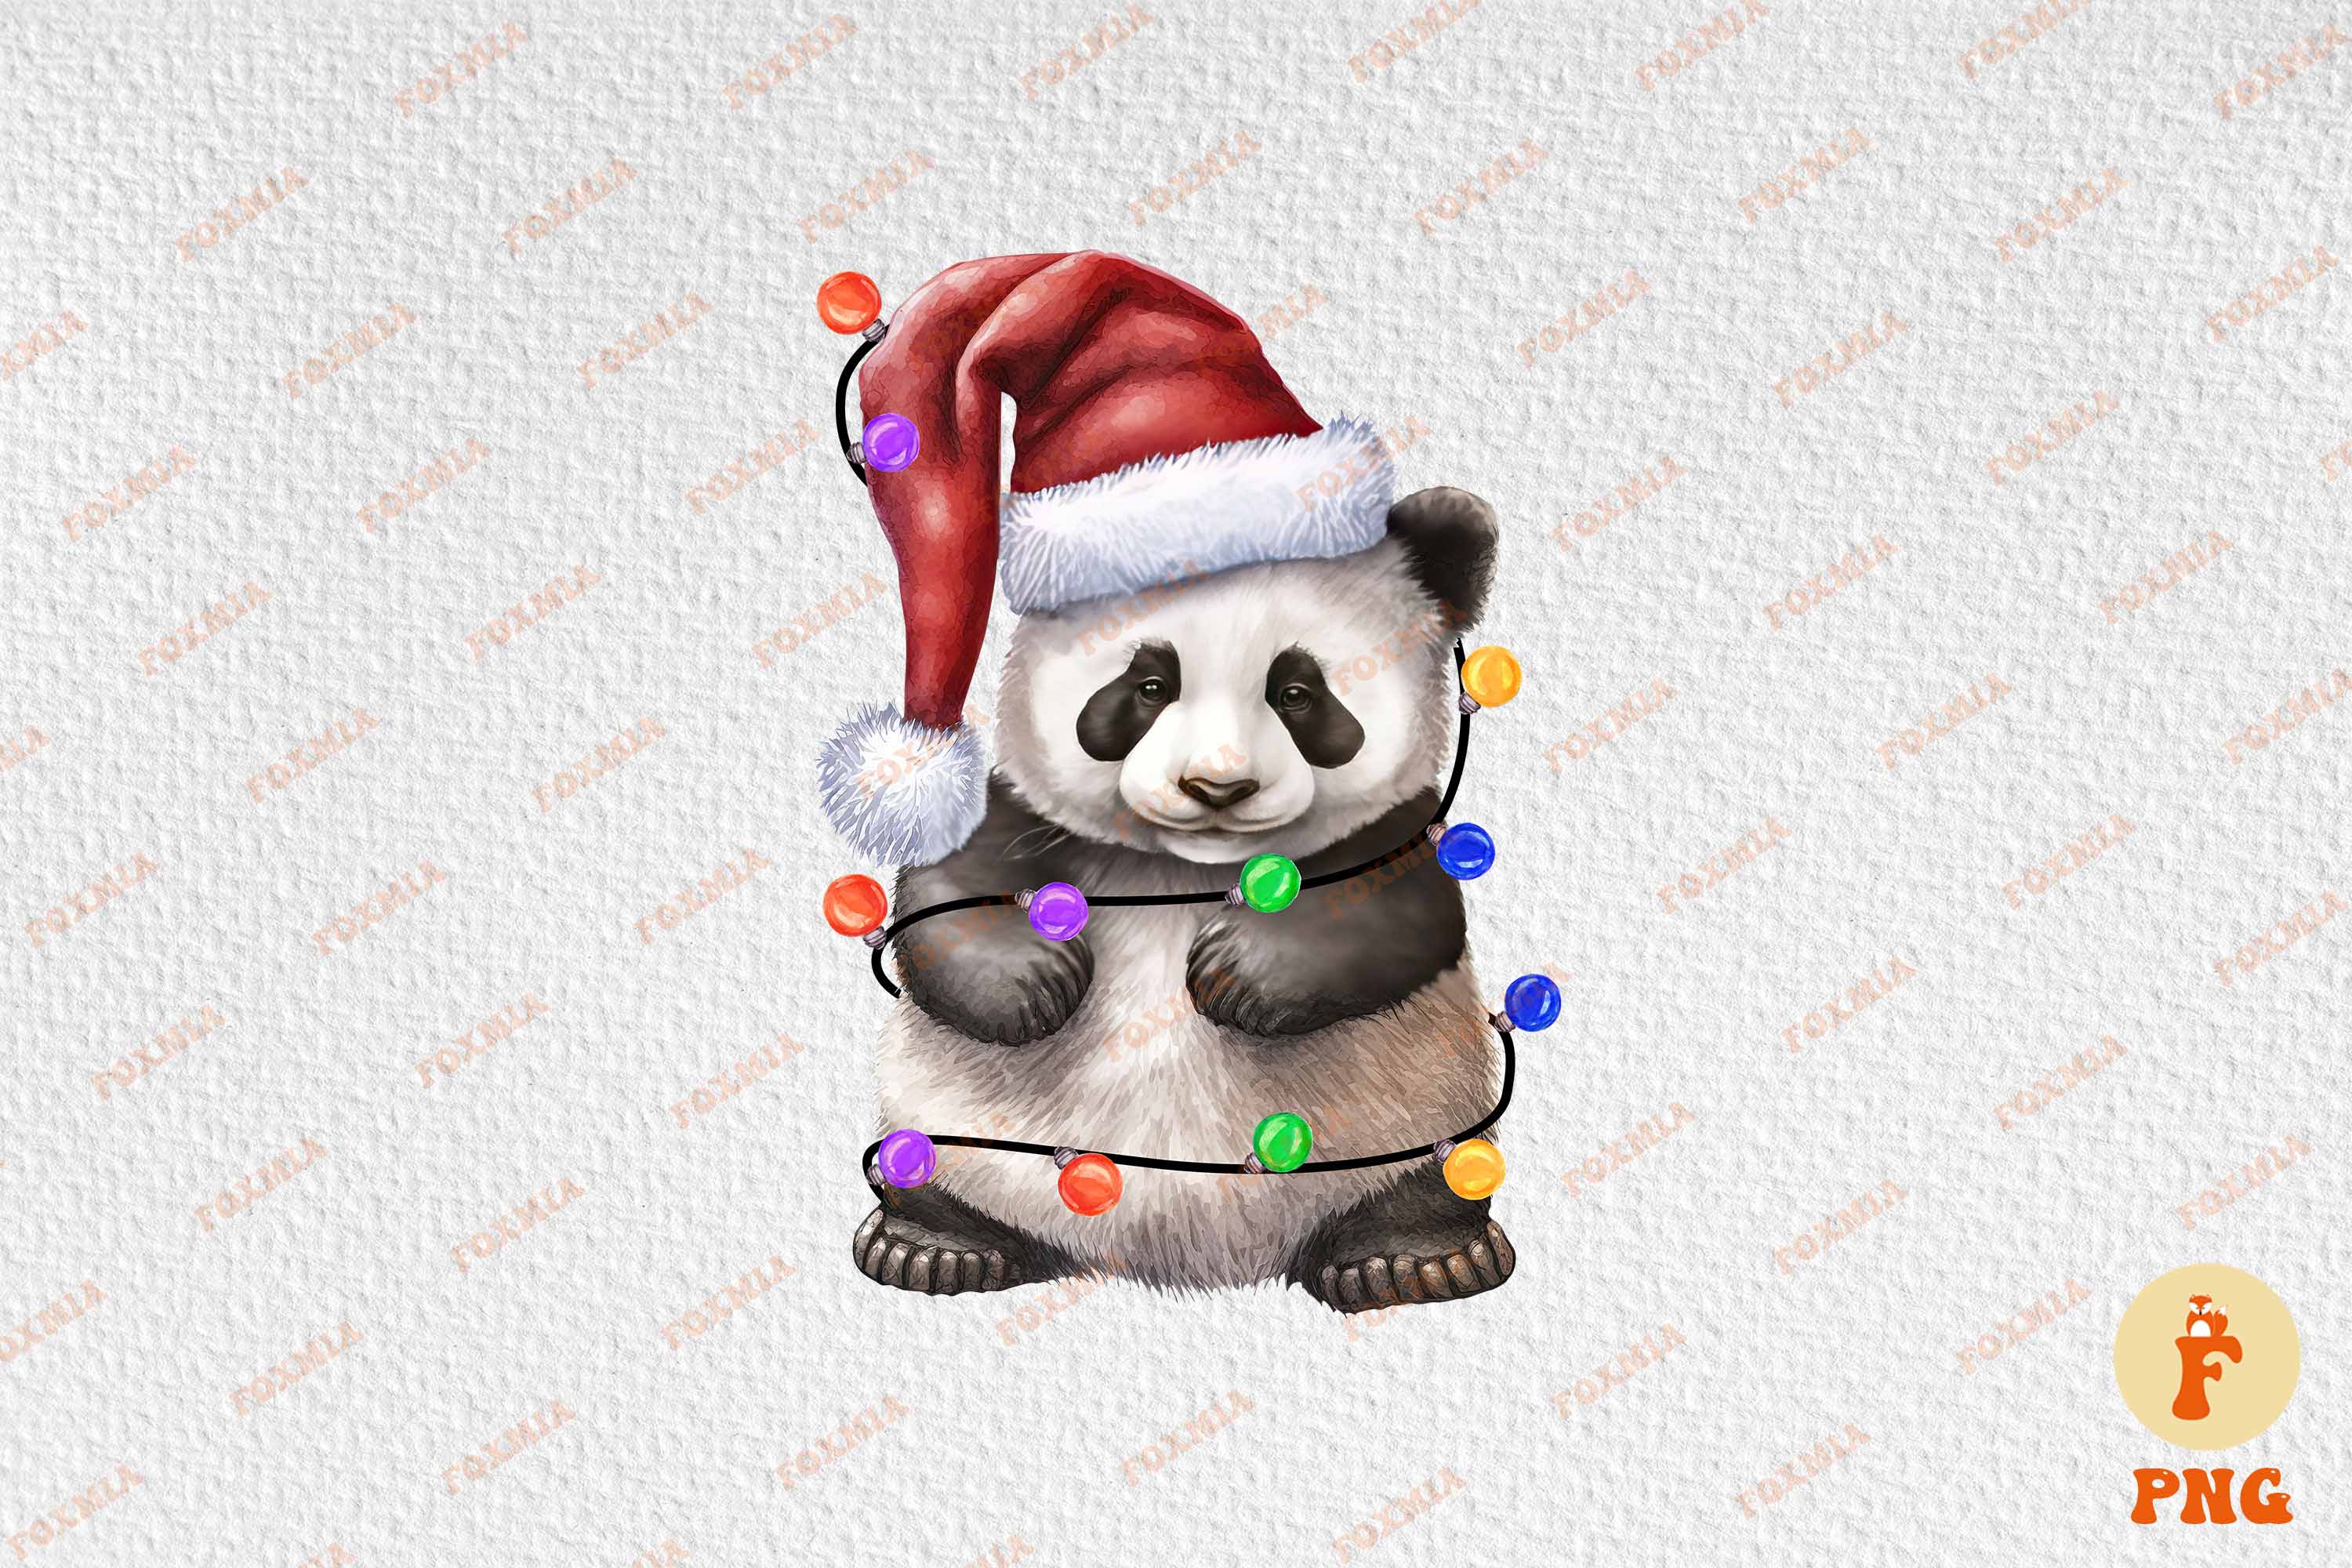 Colorful image of a panda wearing a santa hat.